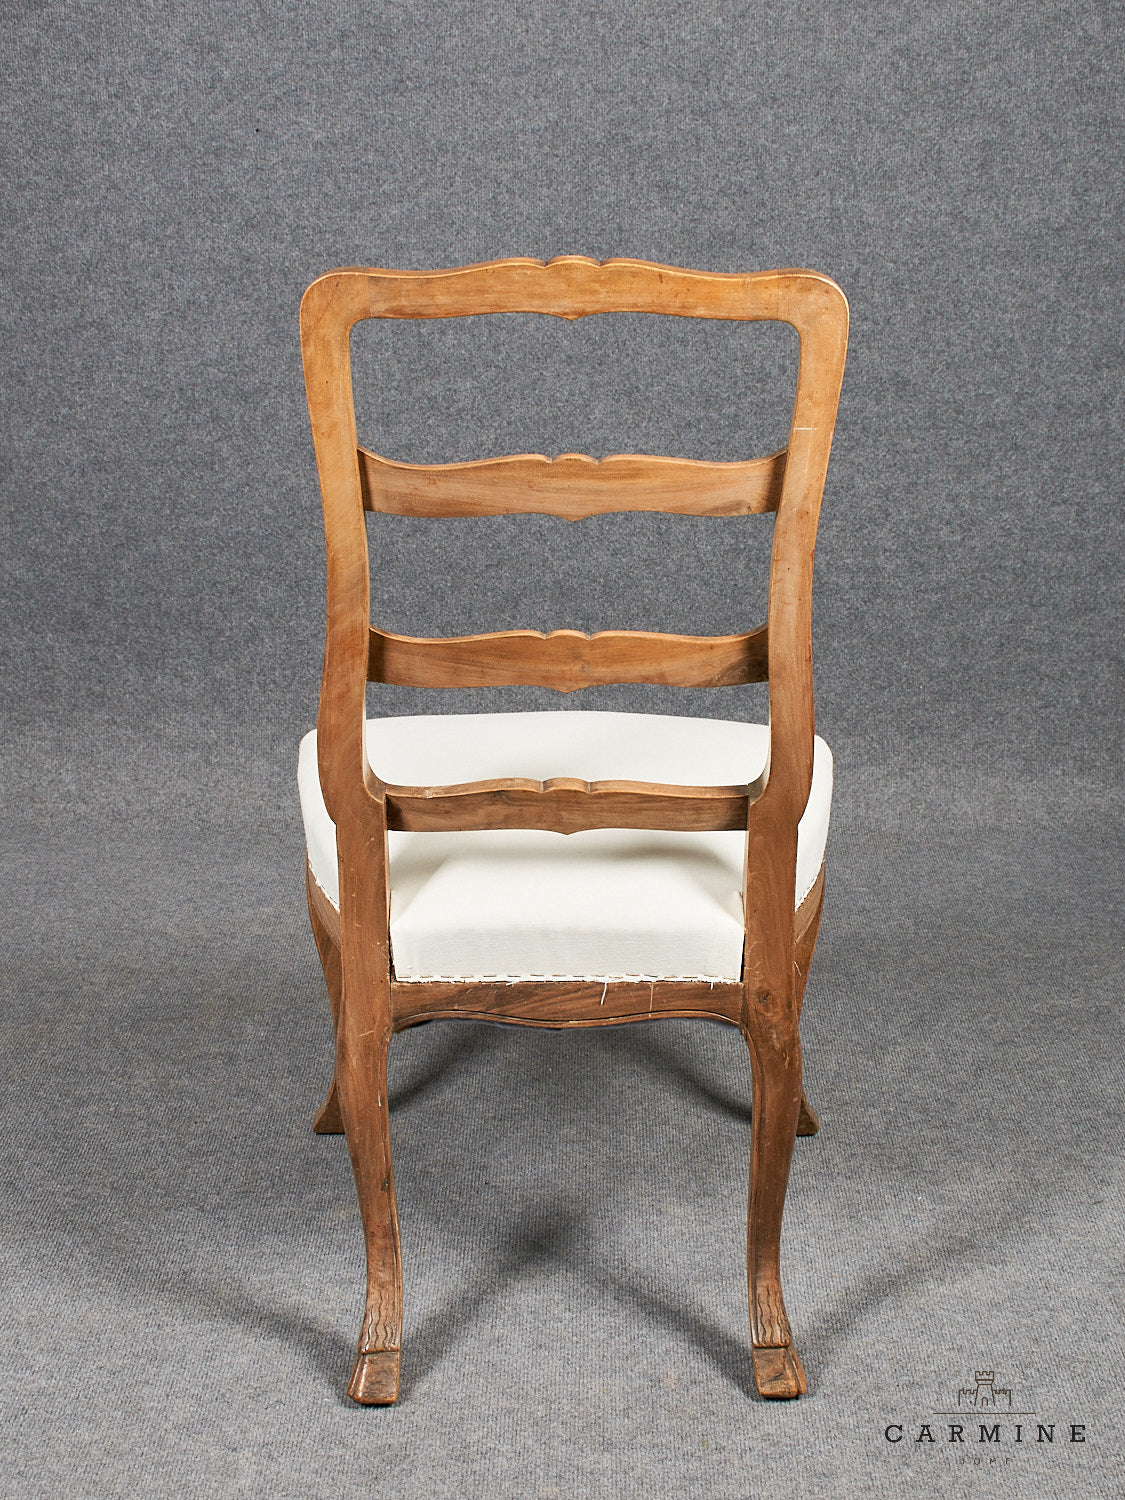 6 chaises bernoises, milieu du XVIIIe siècle